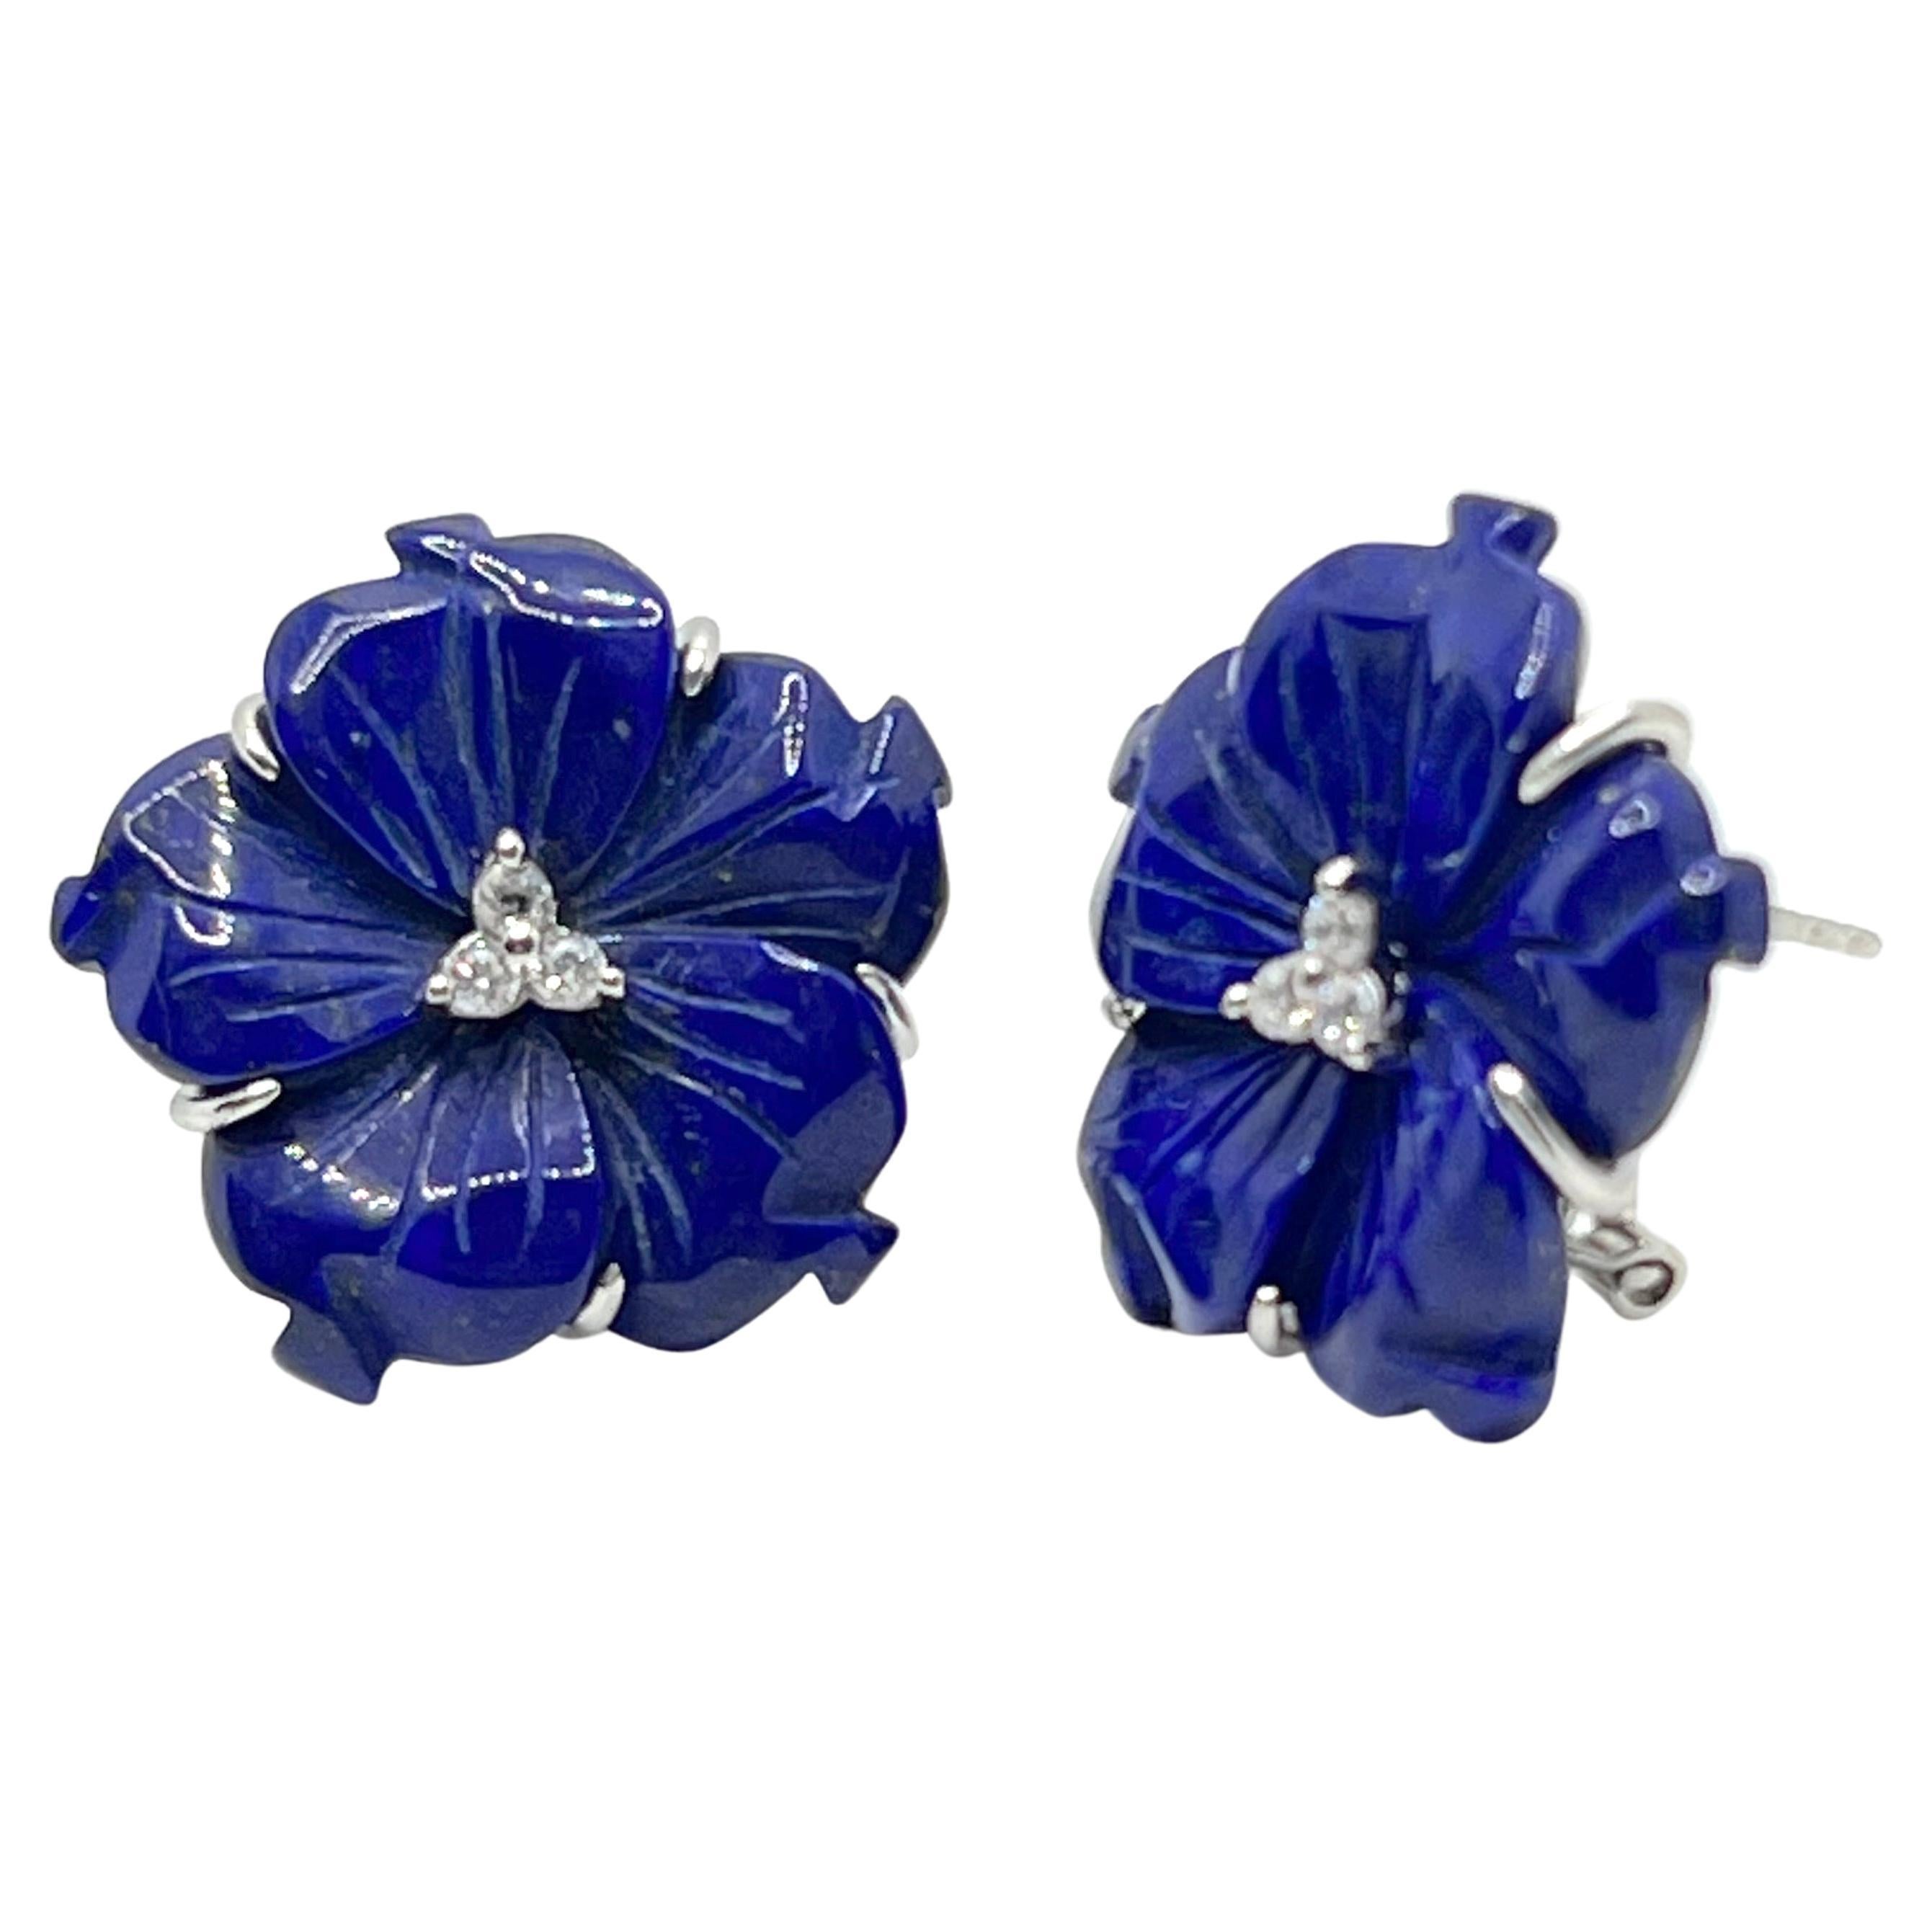 24mm Carved Lapis Lazuli Flower Earrings For Sale